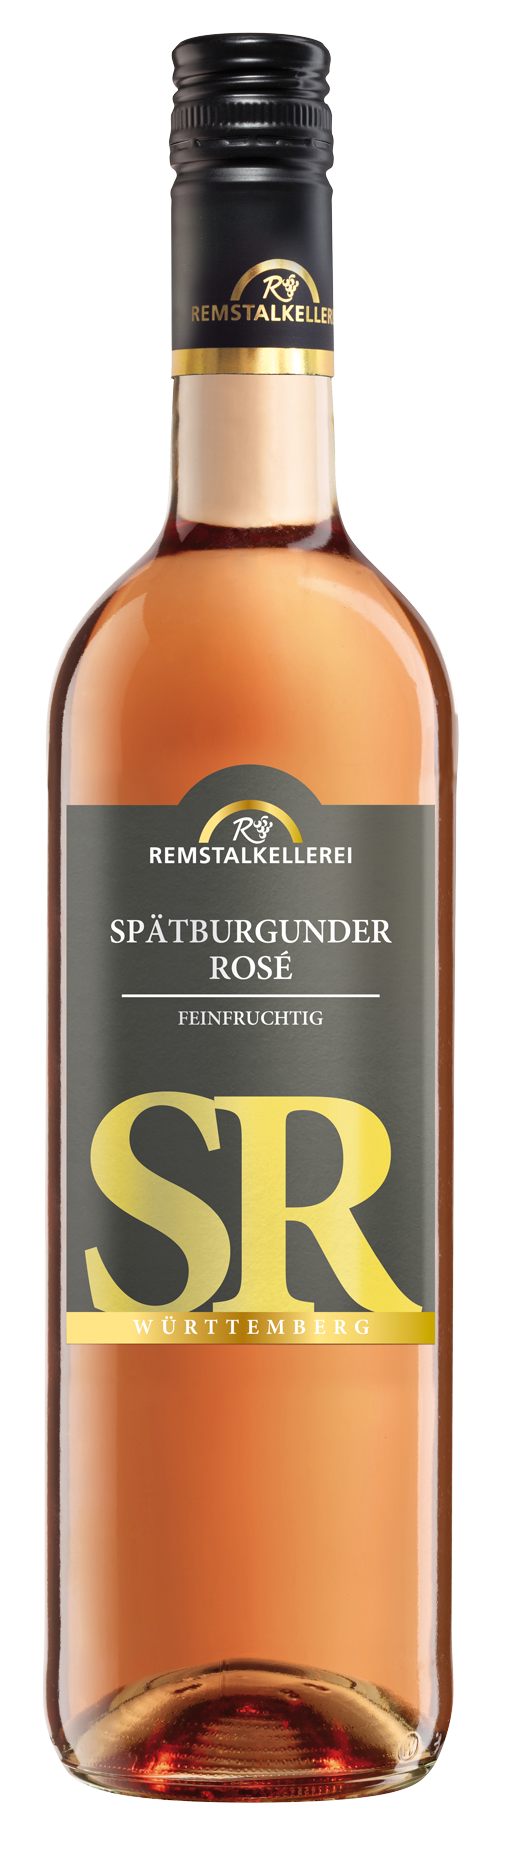 Spätburgunder Rosé "SR" feinfruchtig